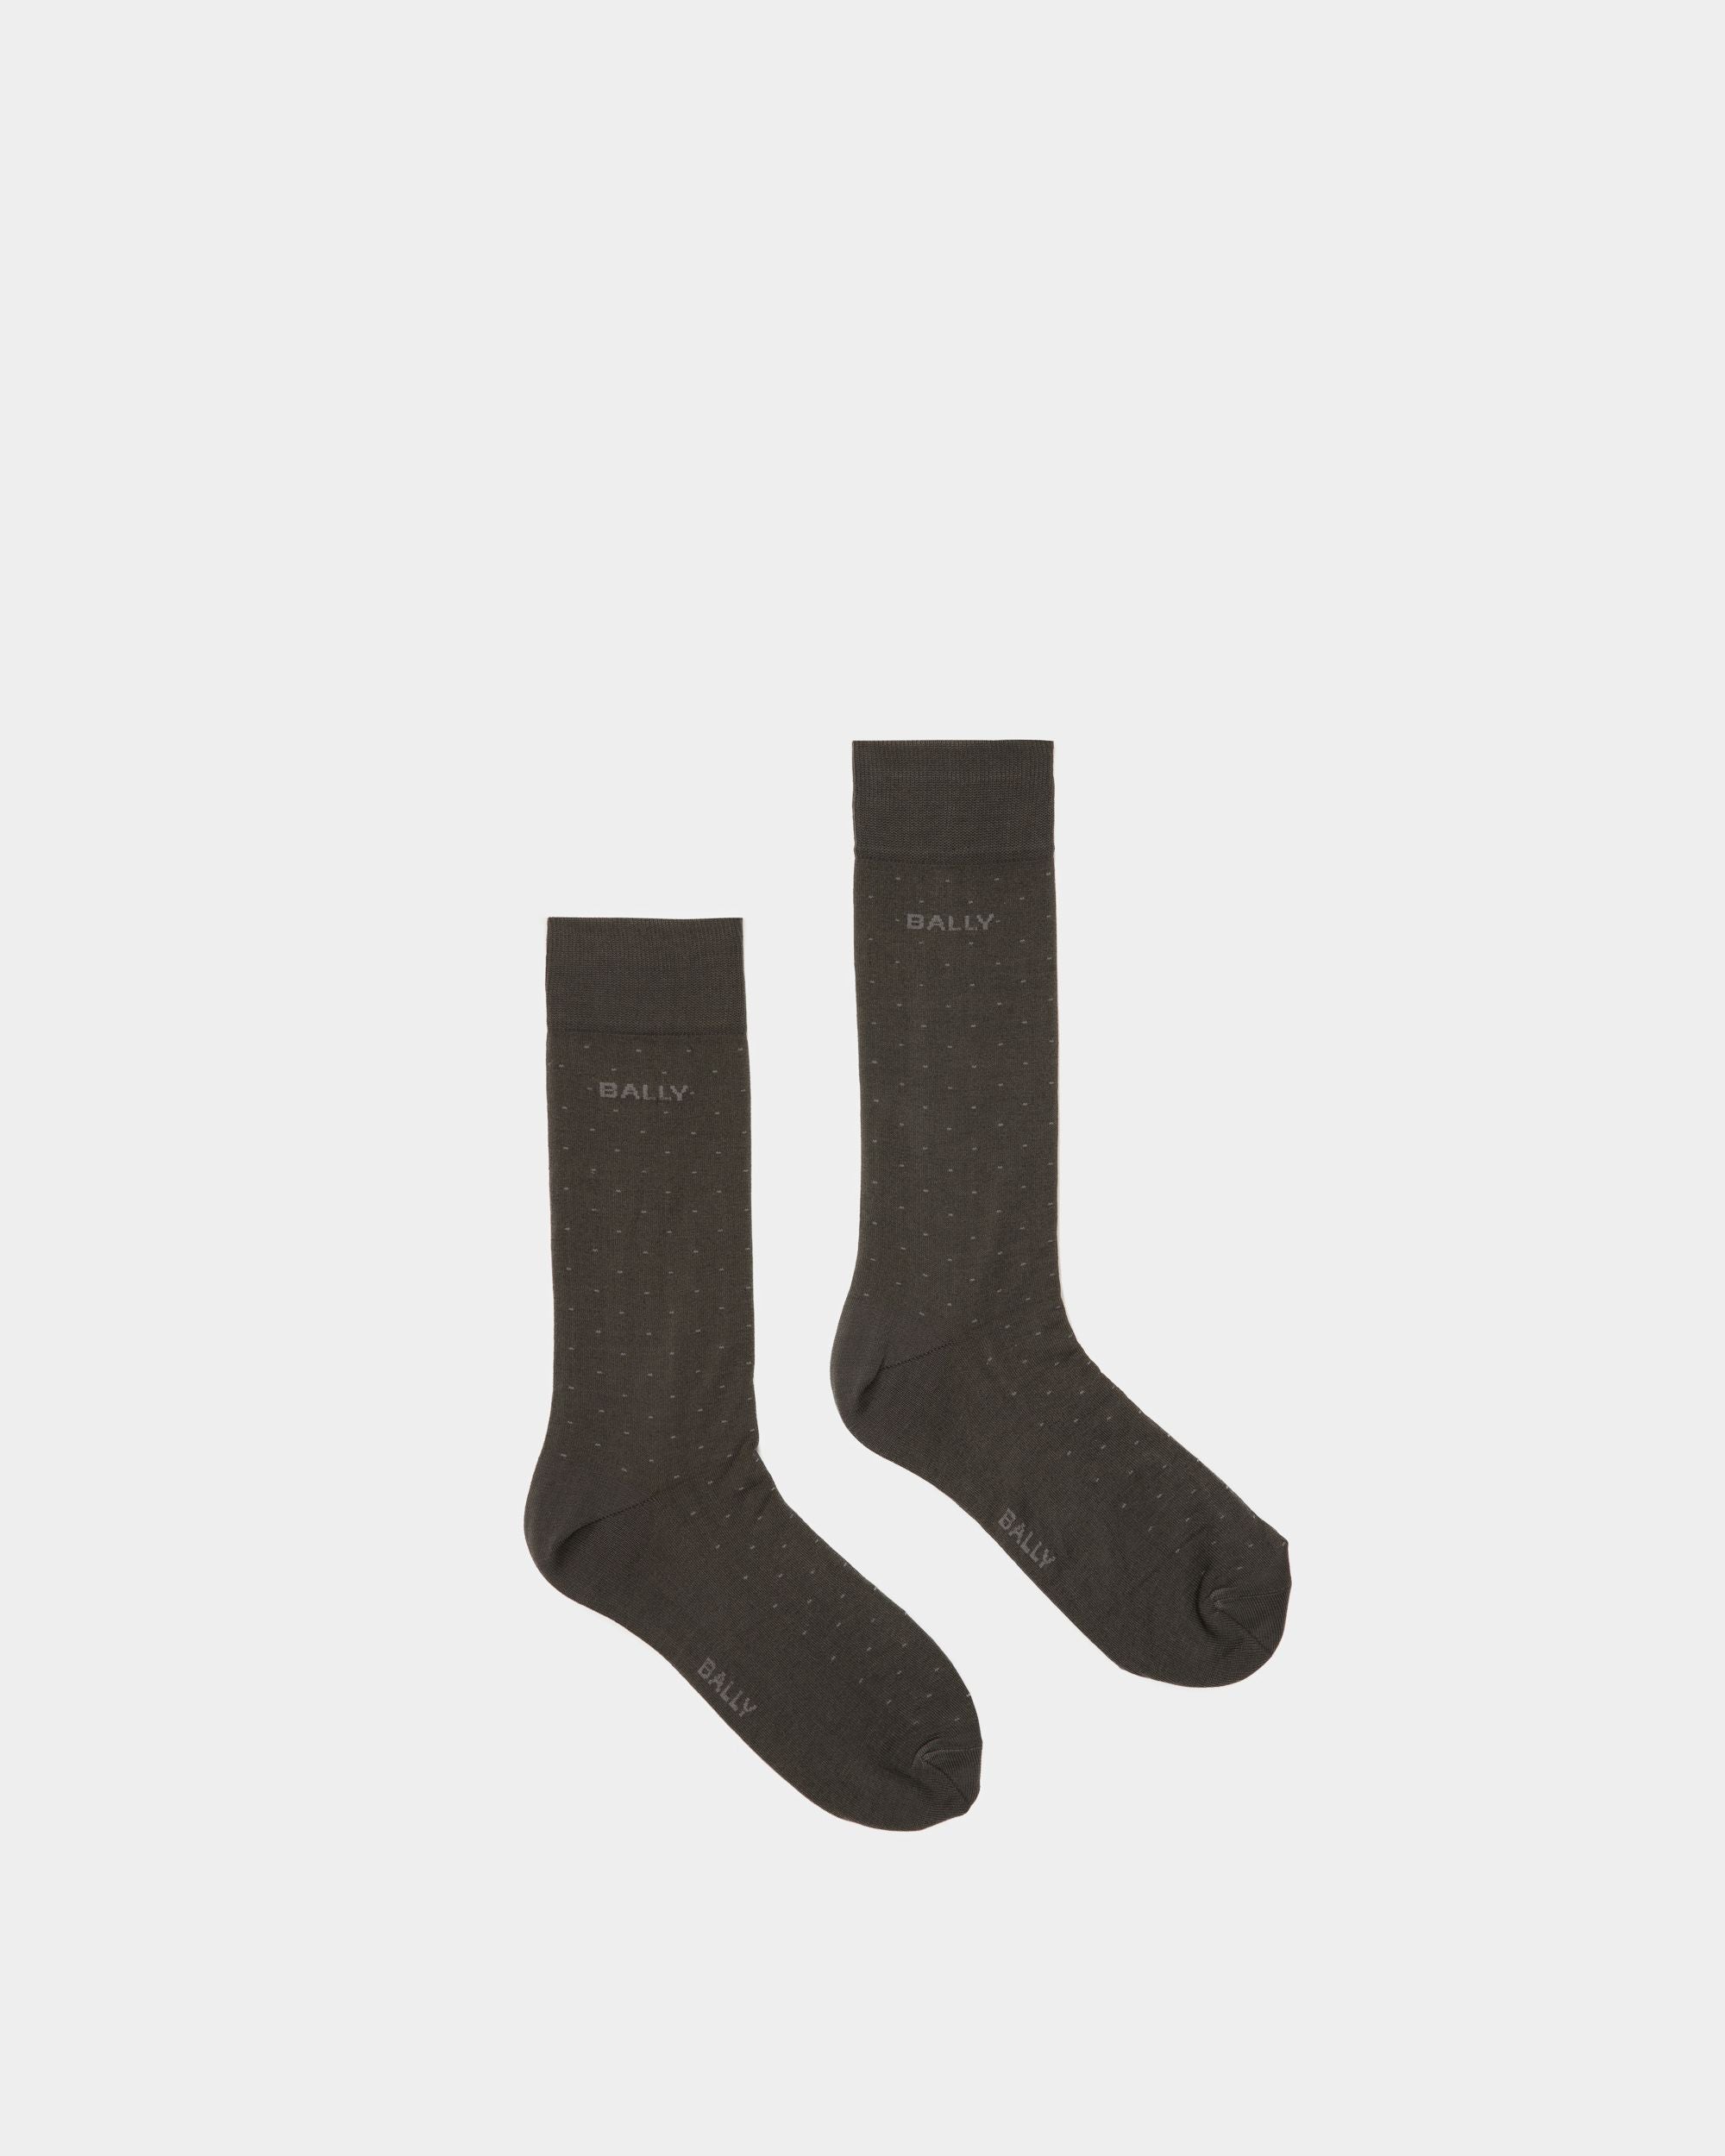 Ribbed Logo Socks | Men's Socks |Gray Cotton Mix | Bally | Still Life Top